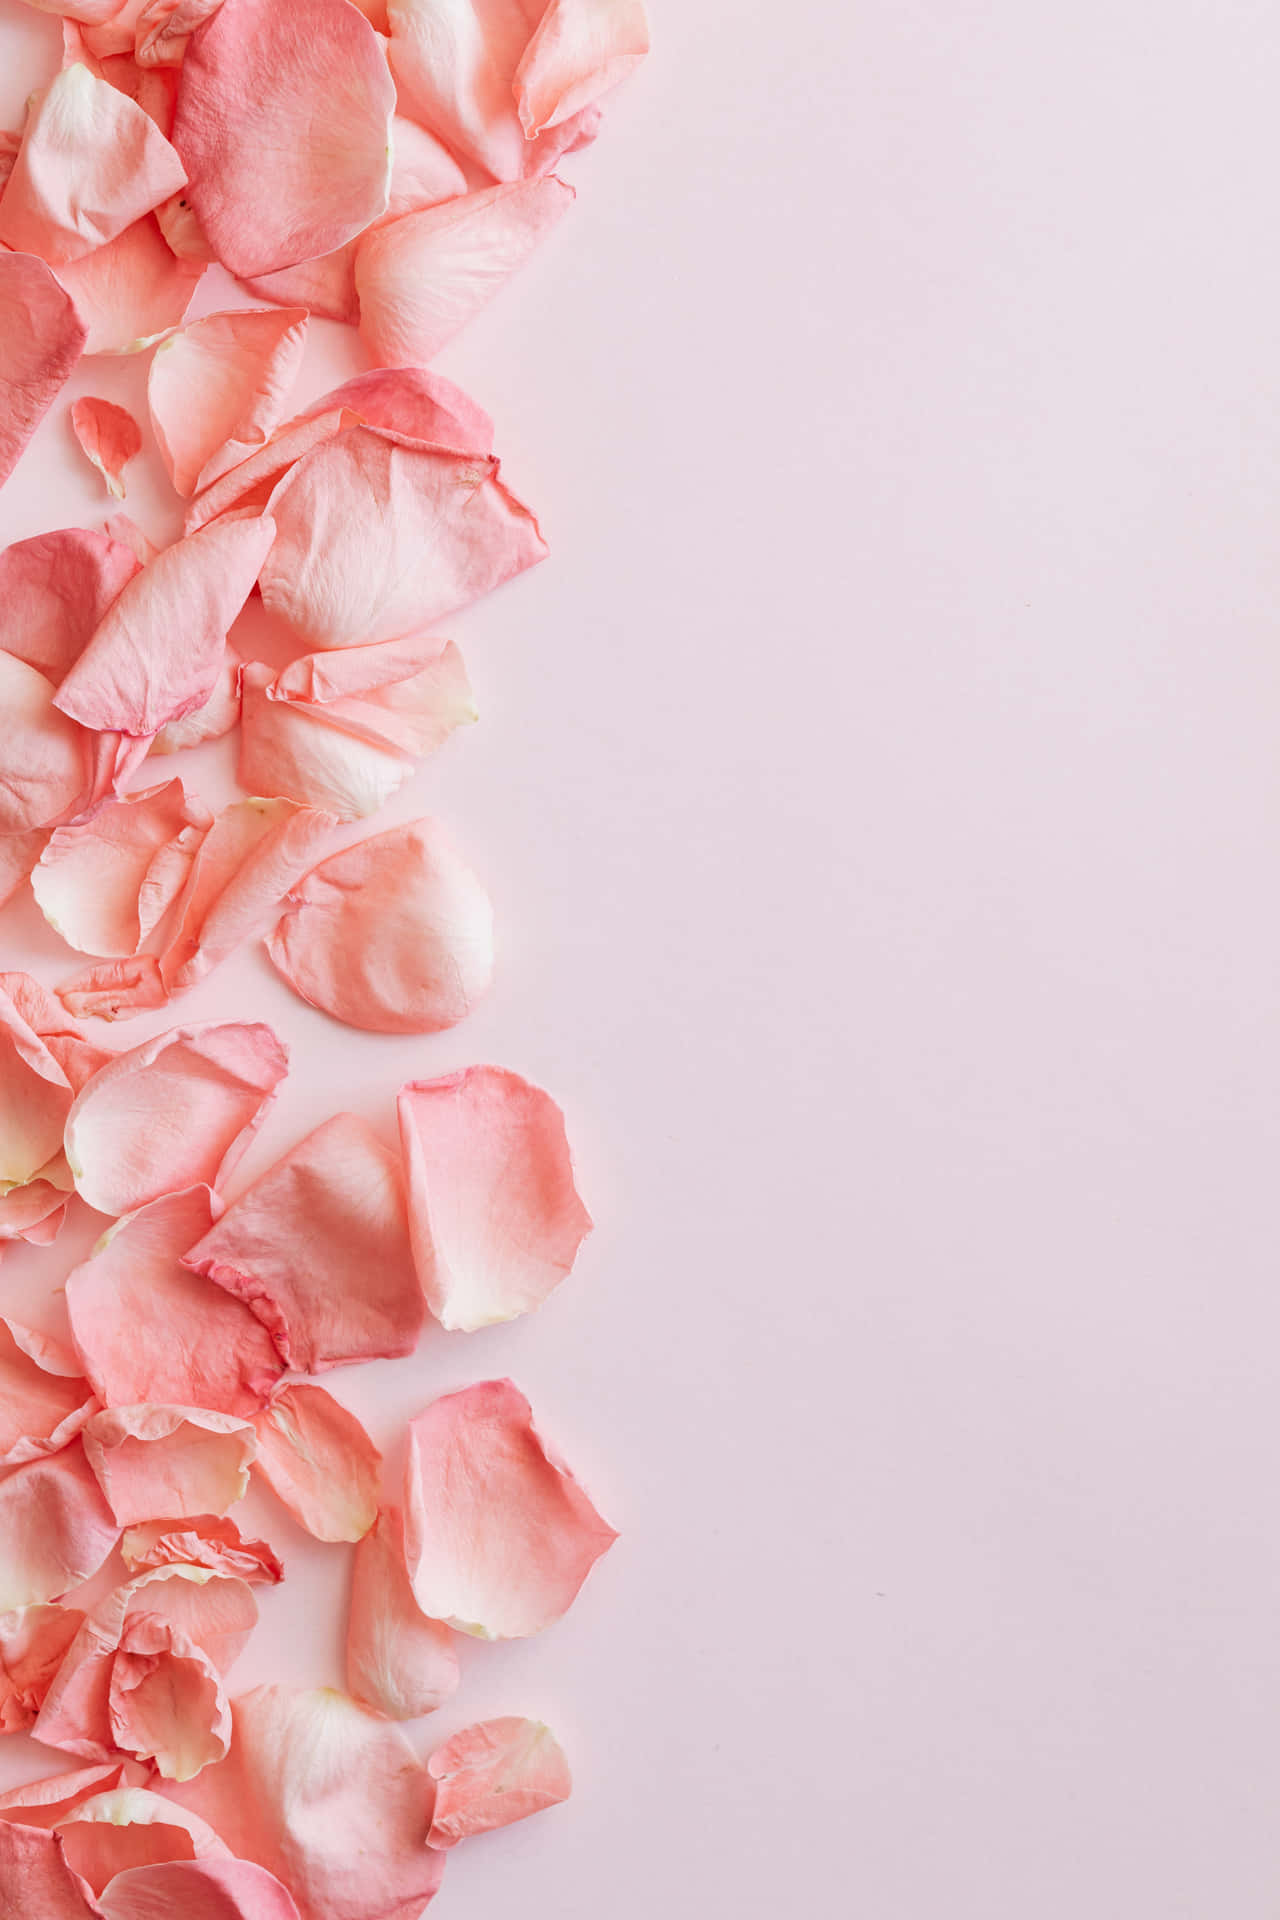 Pink Rose Petals On A Pink Background Background